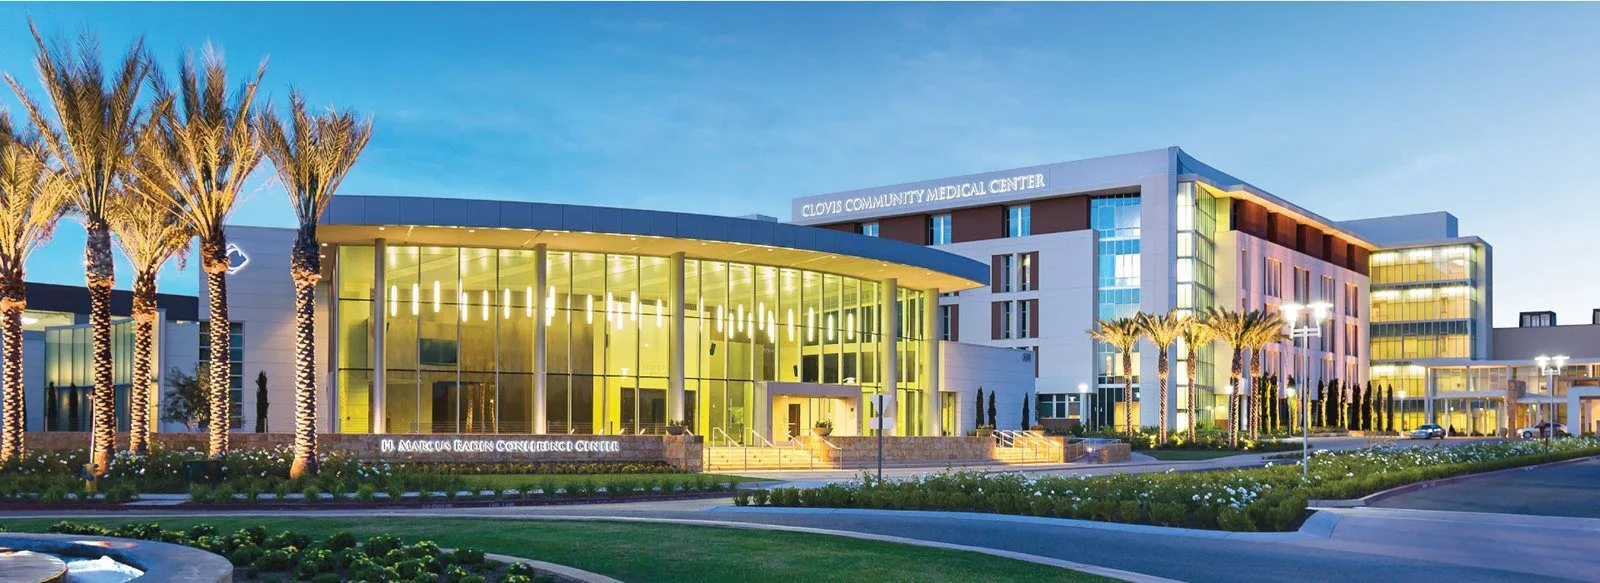 Modern hospital symbolizing Blue Shield of California healthcare